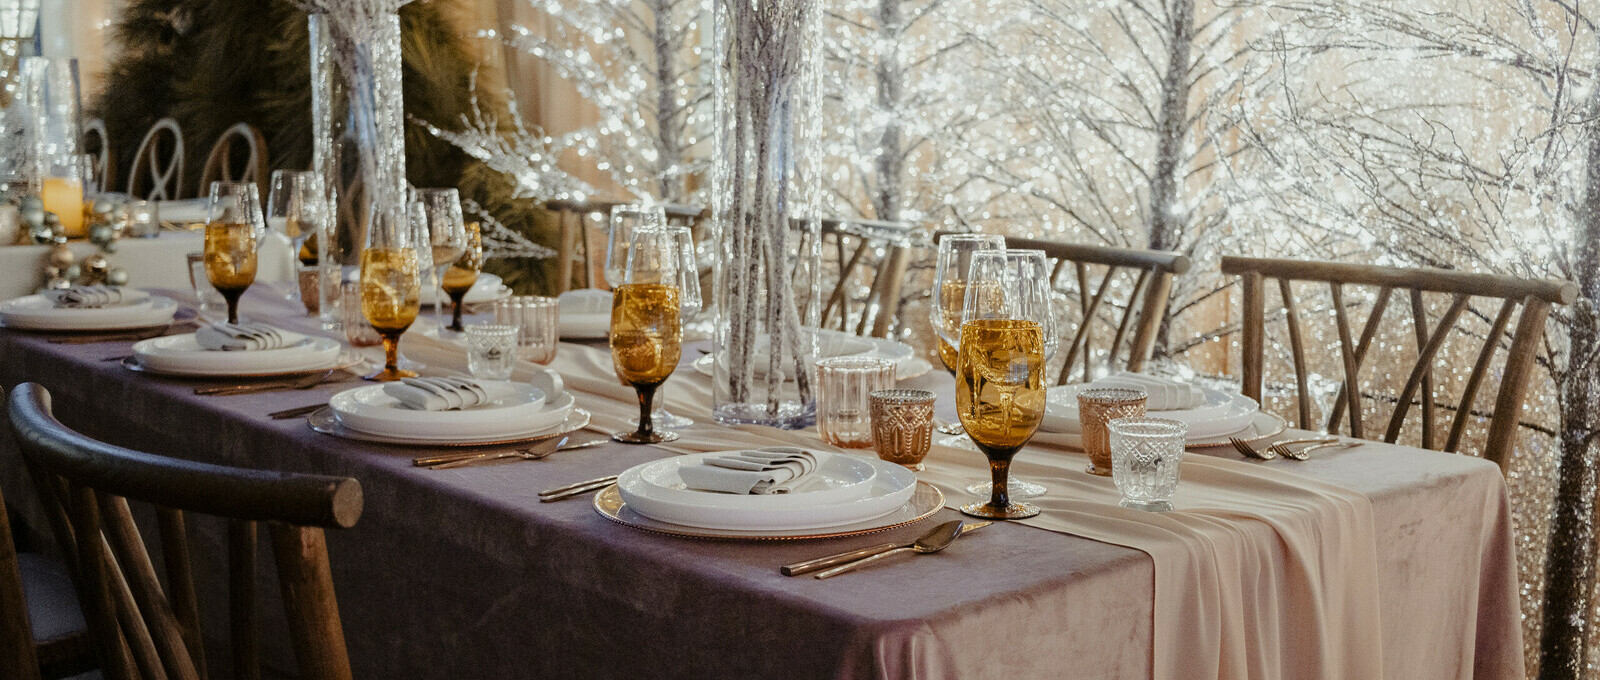 Special Event Rentals - Winter Table Decor